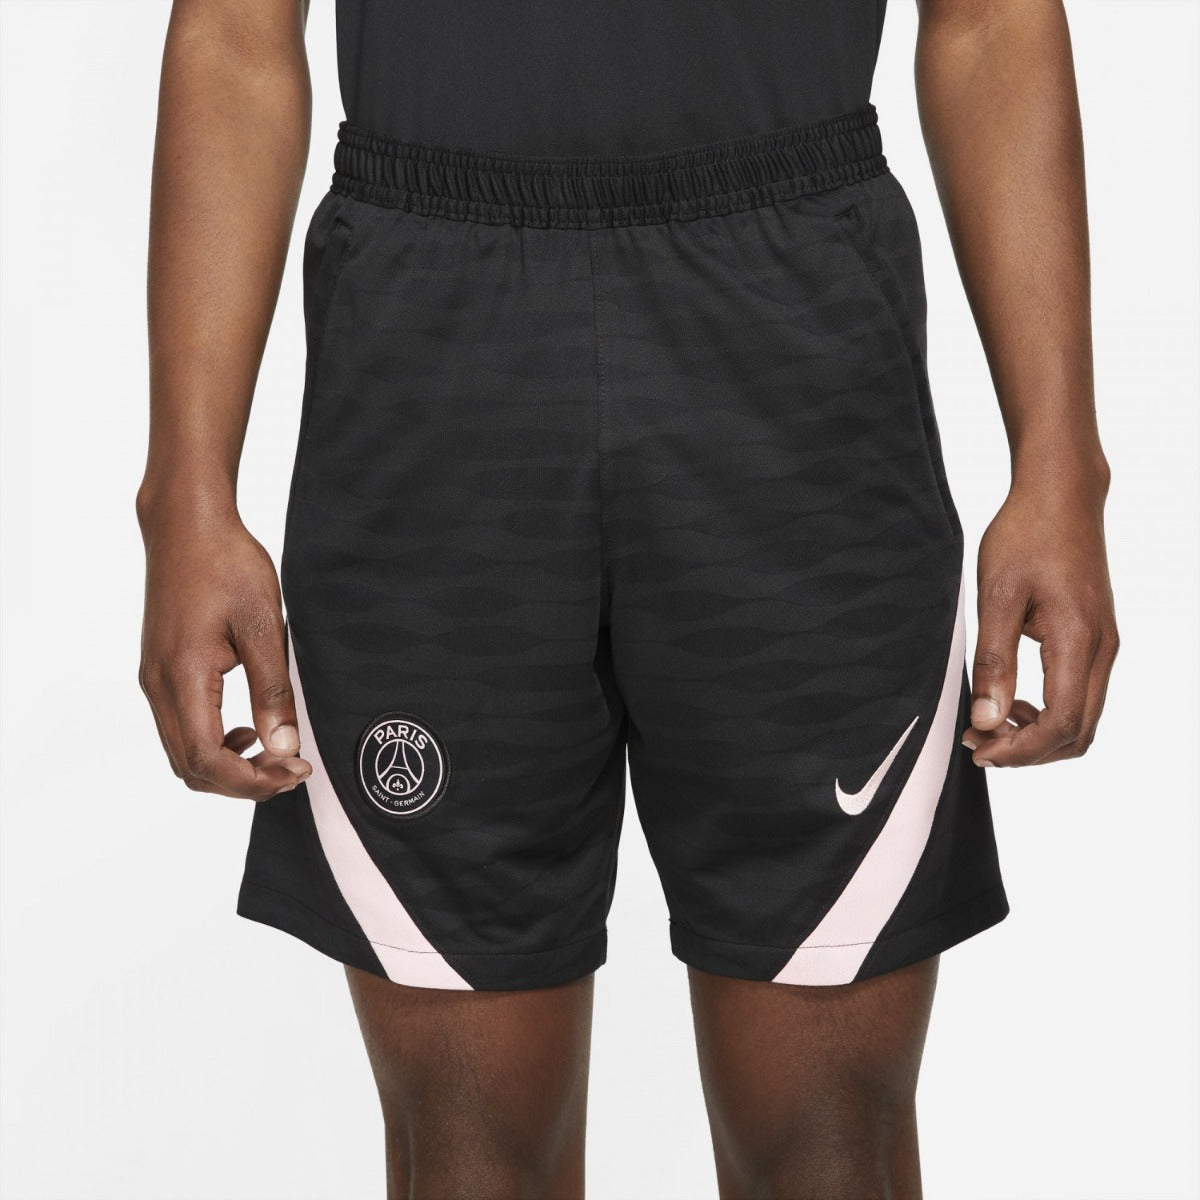 Maillot entraînement Nike rose noir sur